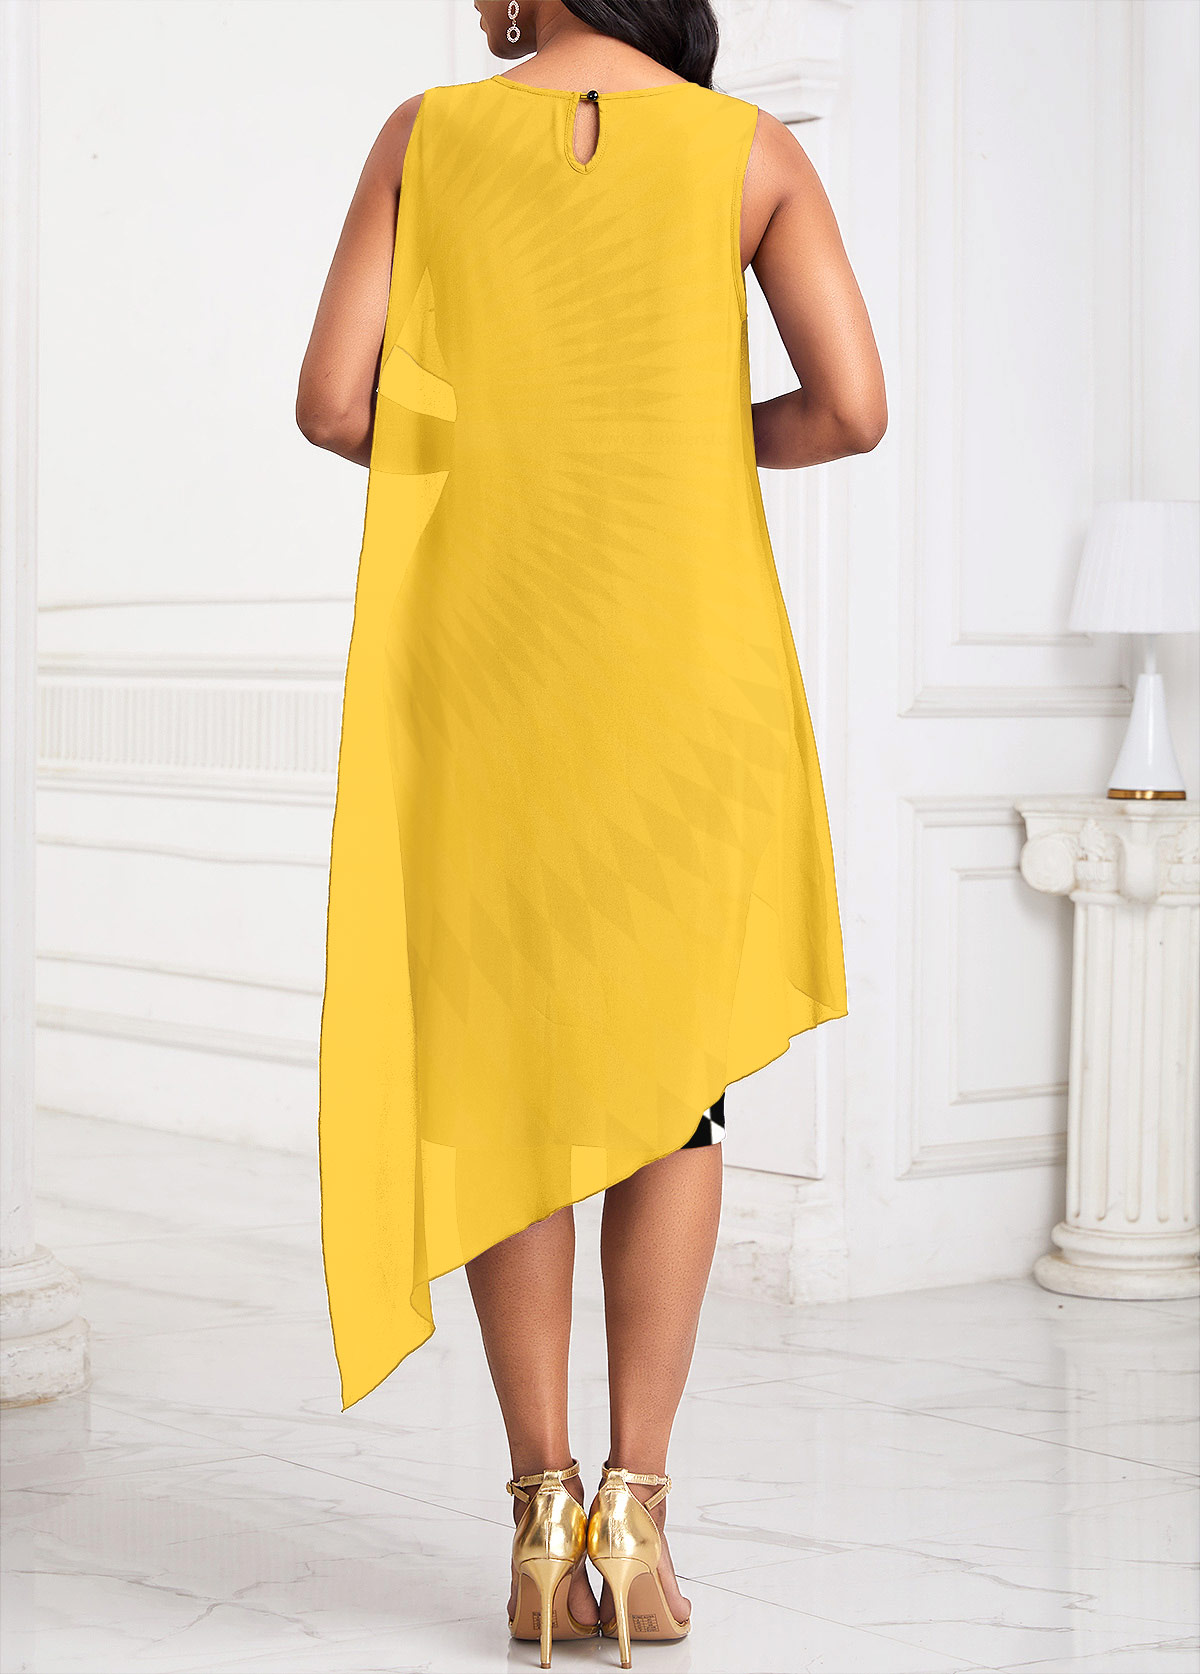 Wave Pattern Print Patchwork Yellow Sleeveless Bodycon Dress